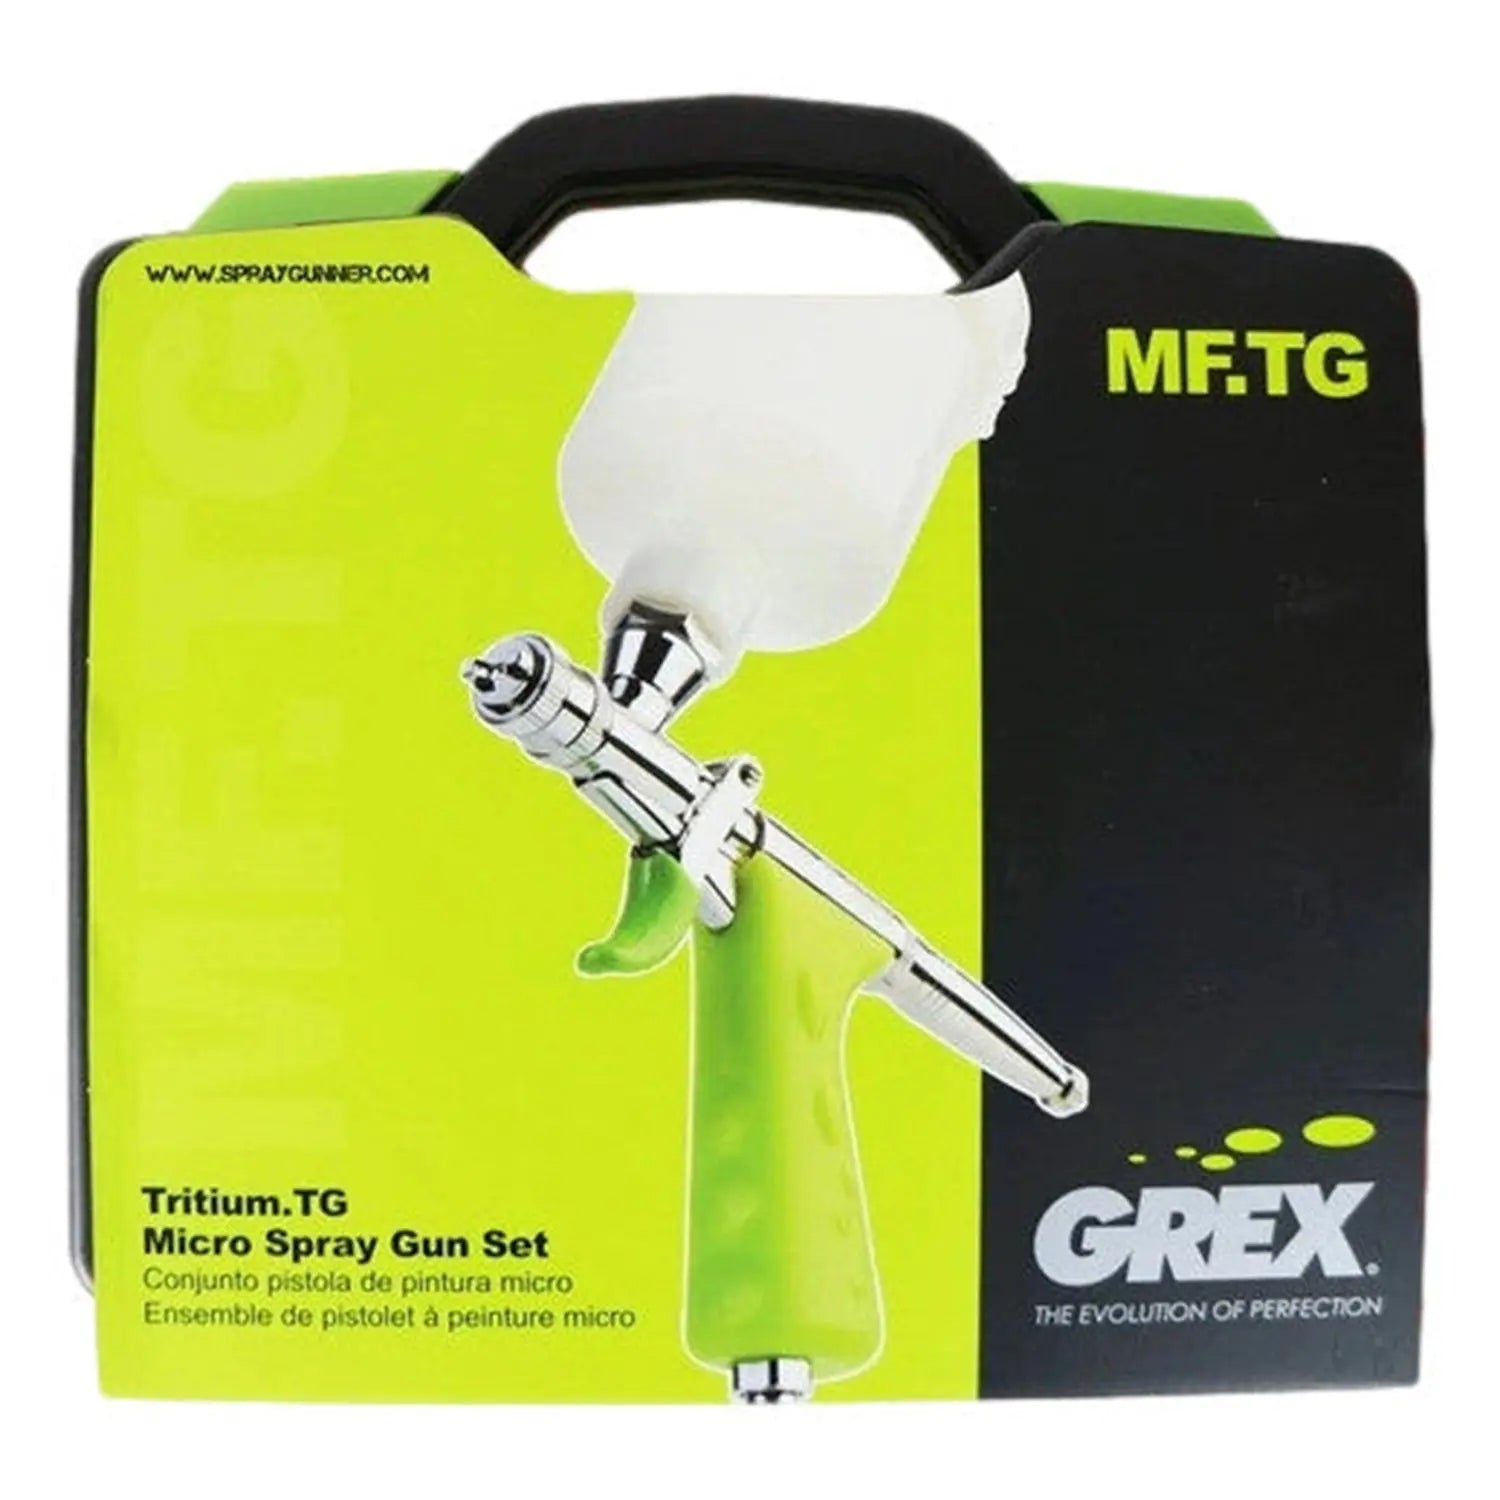 Grex Tritium.TG Micro Spray Gun Set with 0.7mm nozzle Grex Airbrush